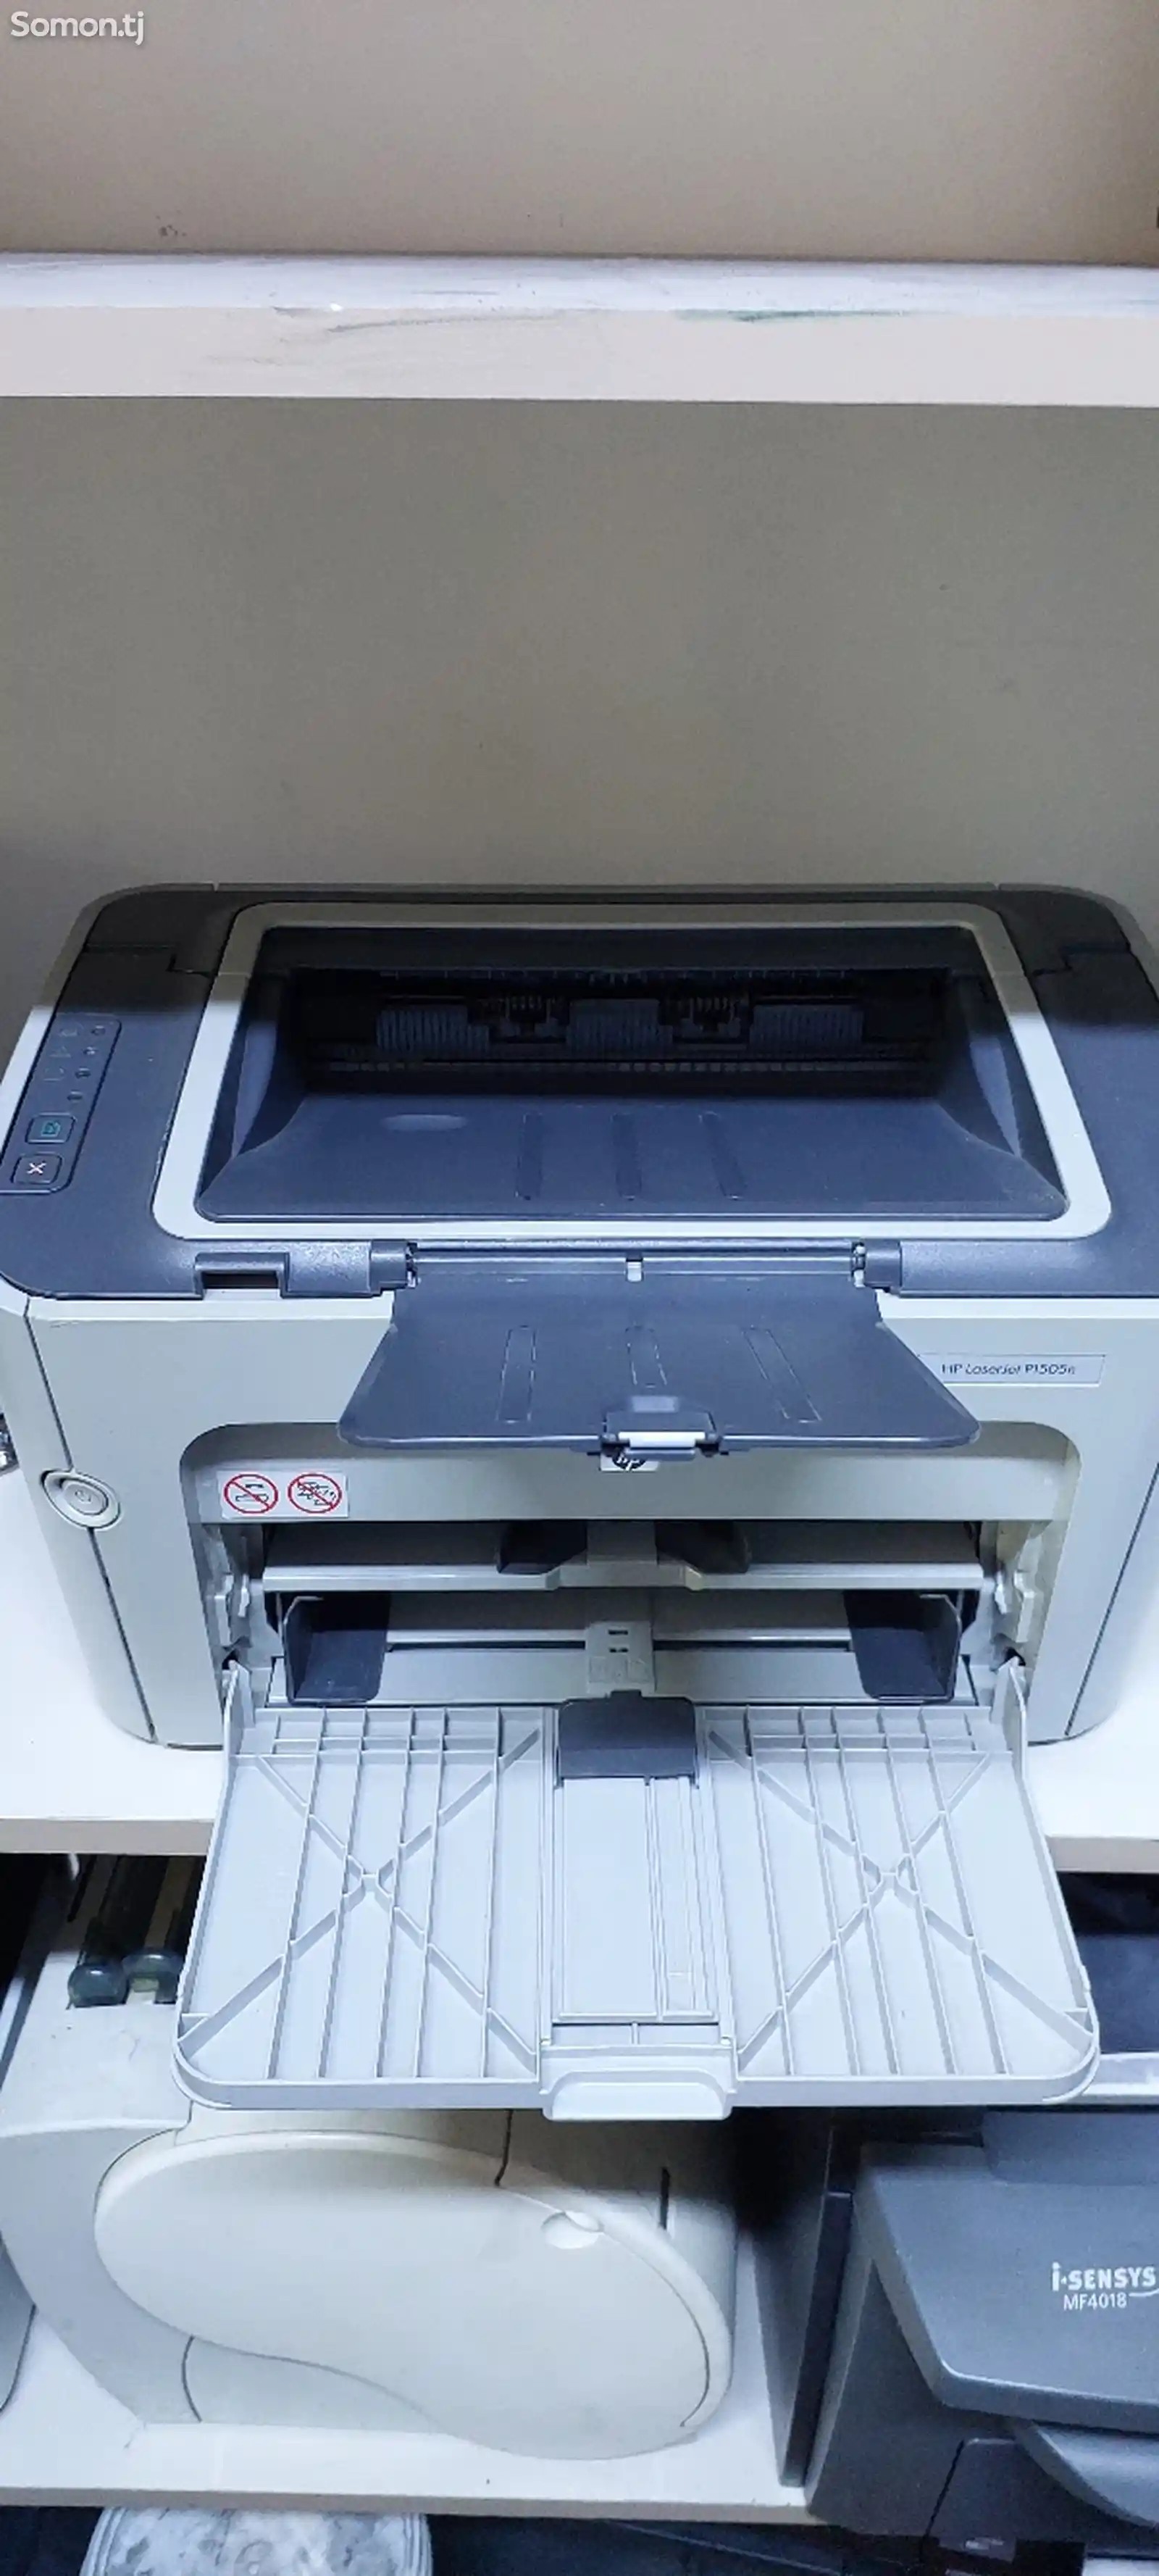 Принтер hp P1505n-1